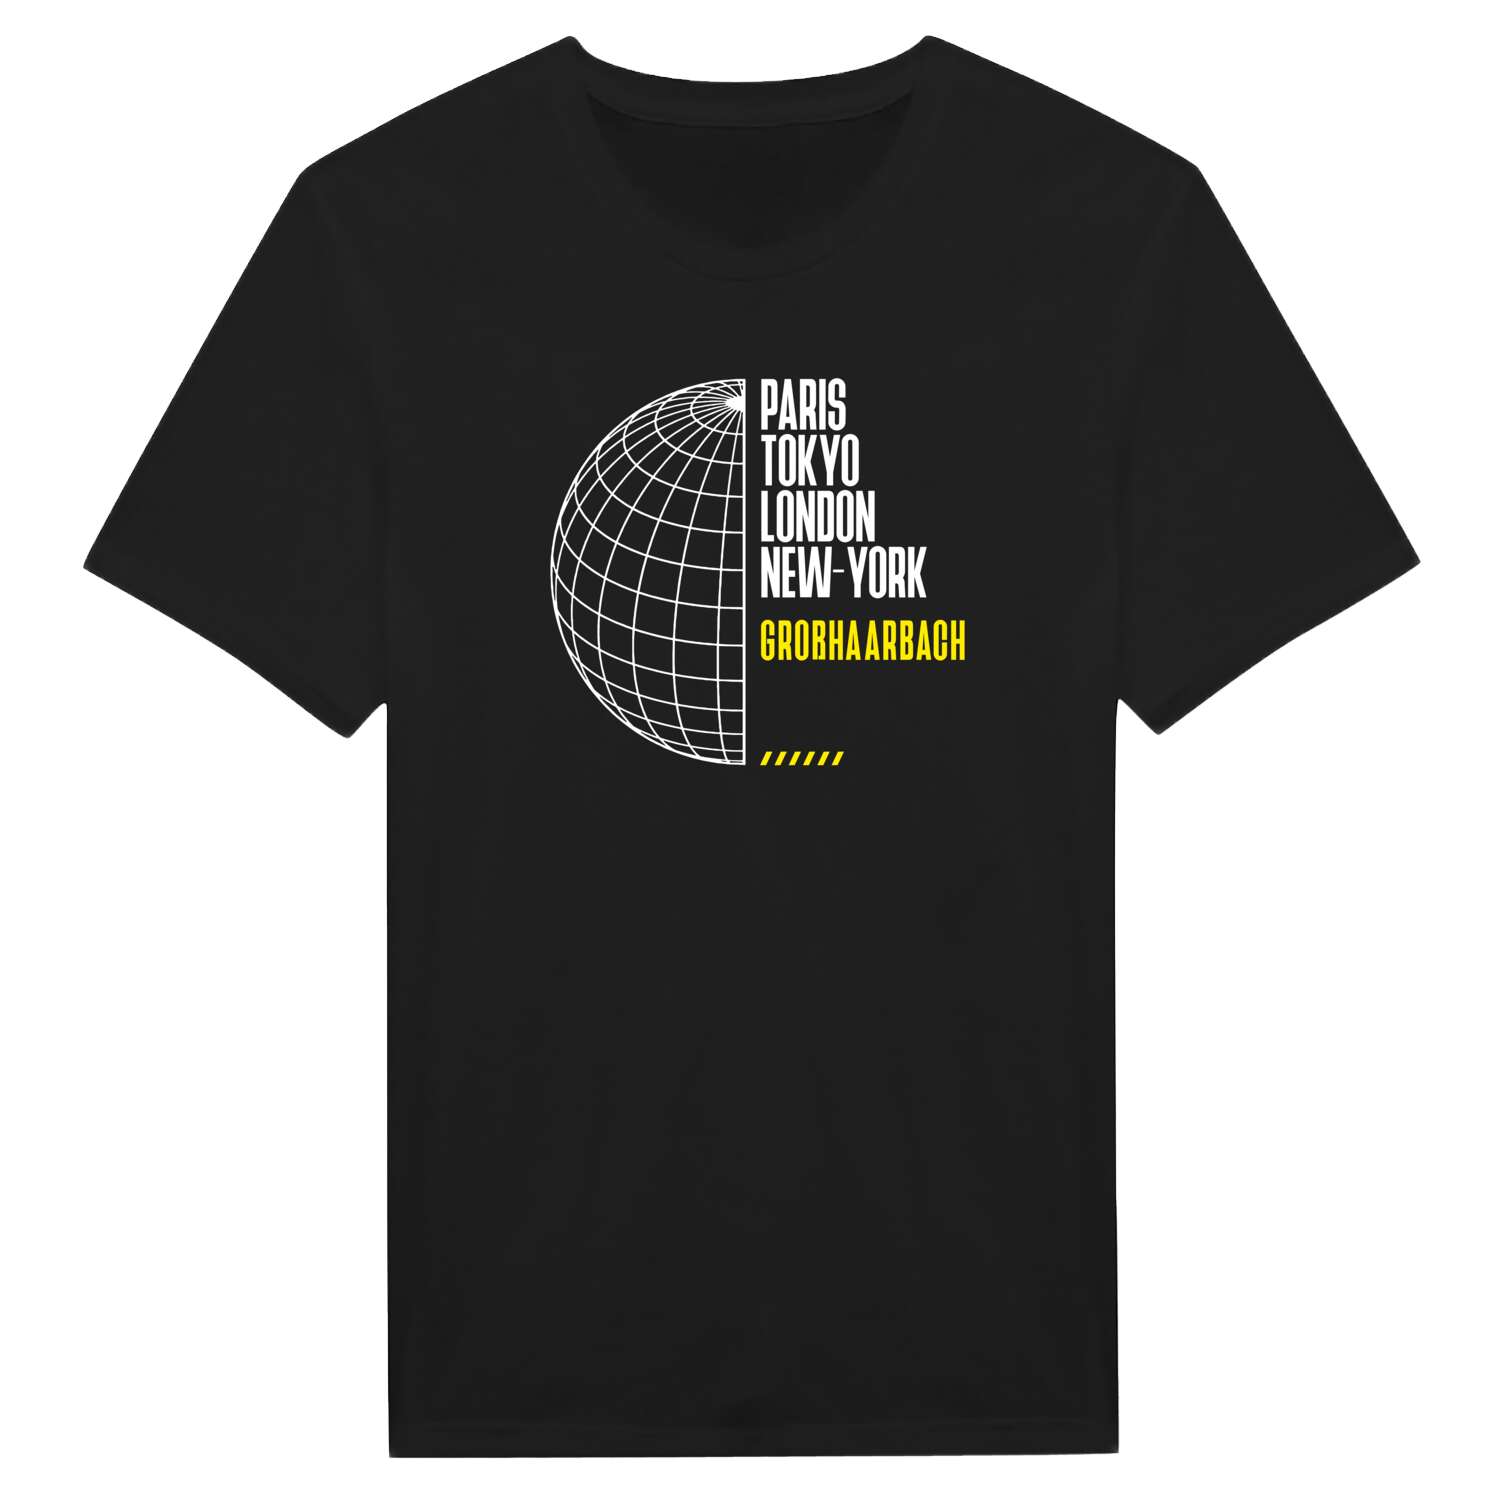 Großhaarbach T-Shirt »Paris Tokyo London«